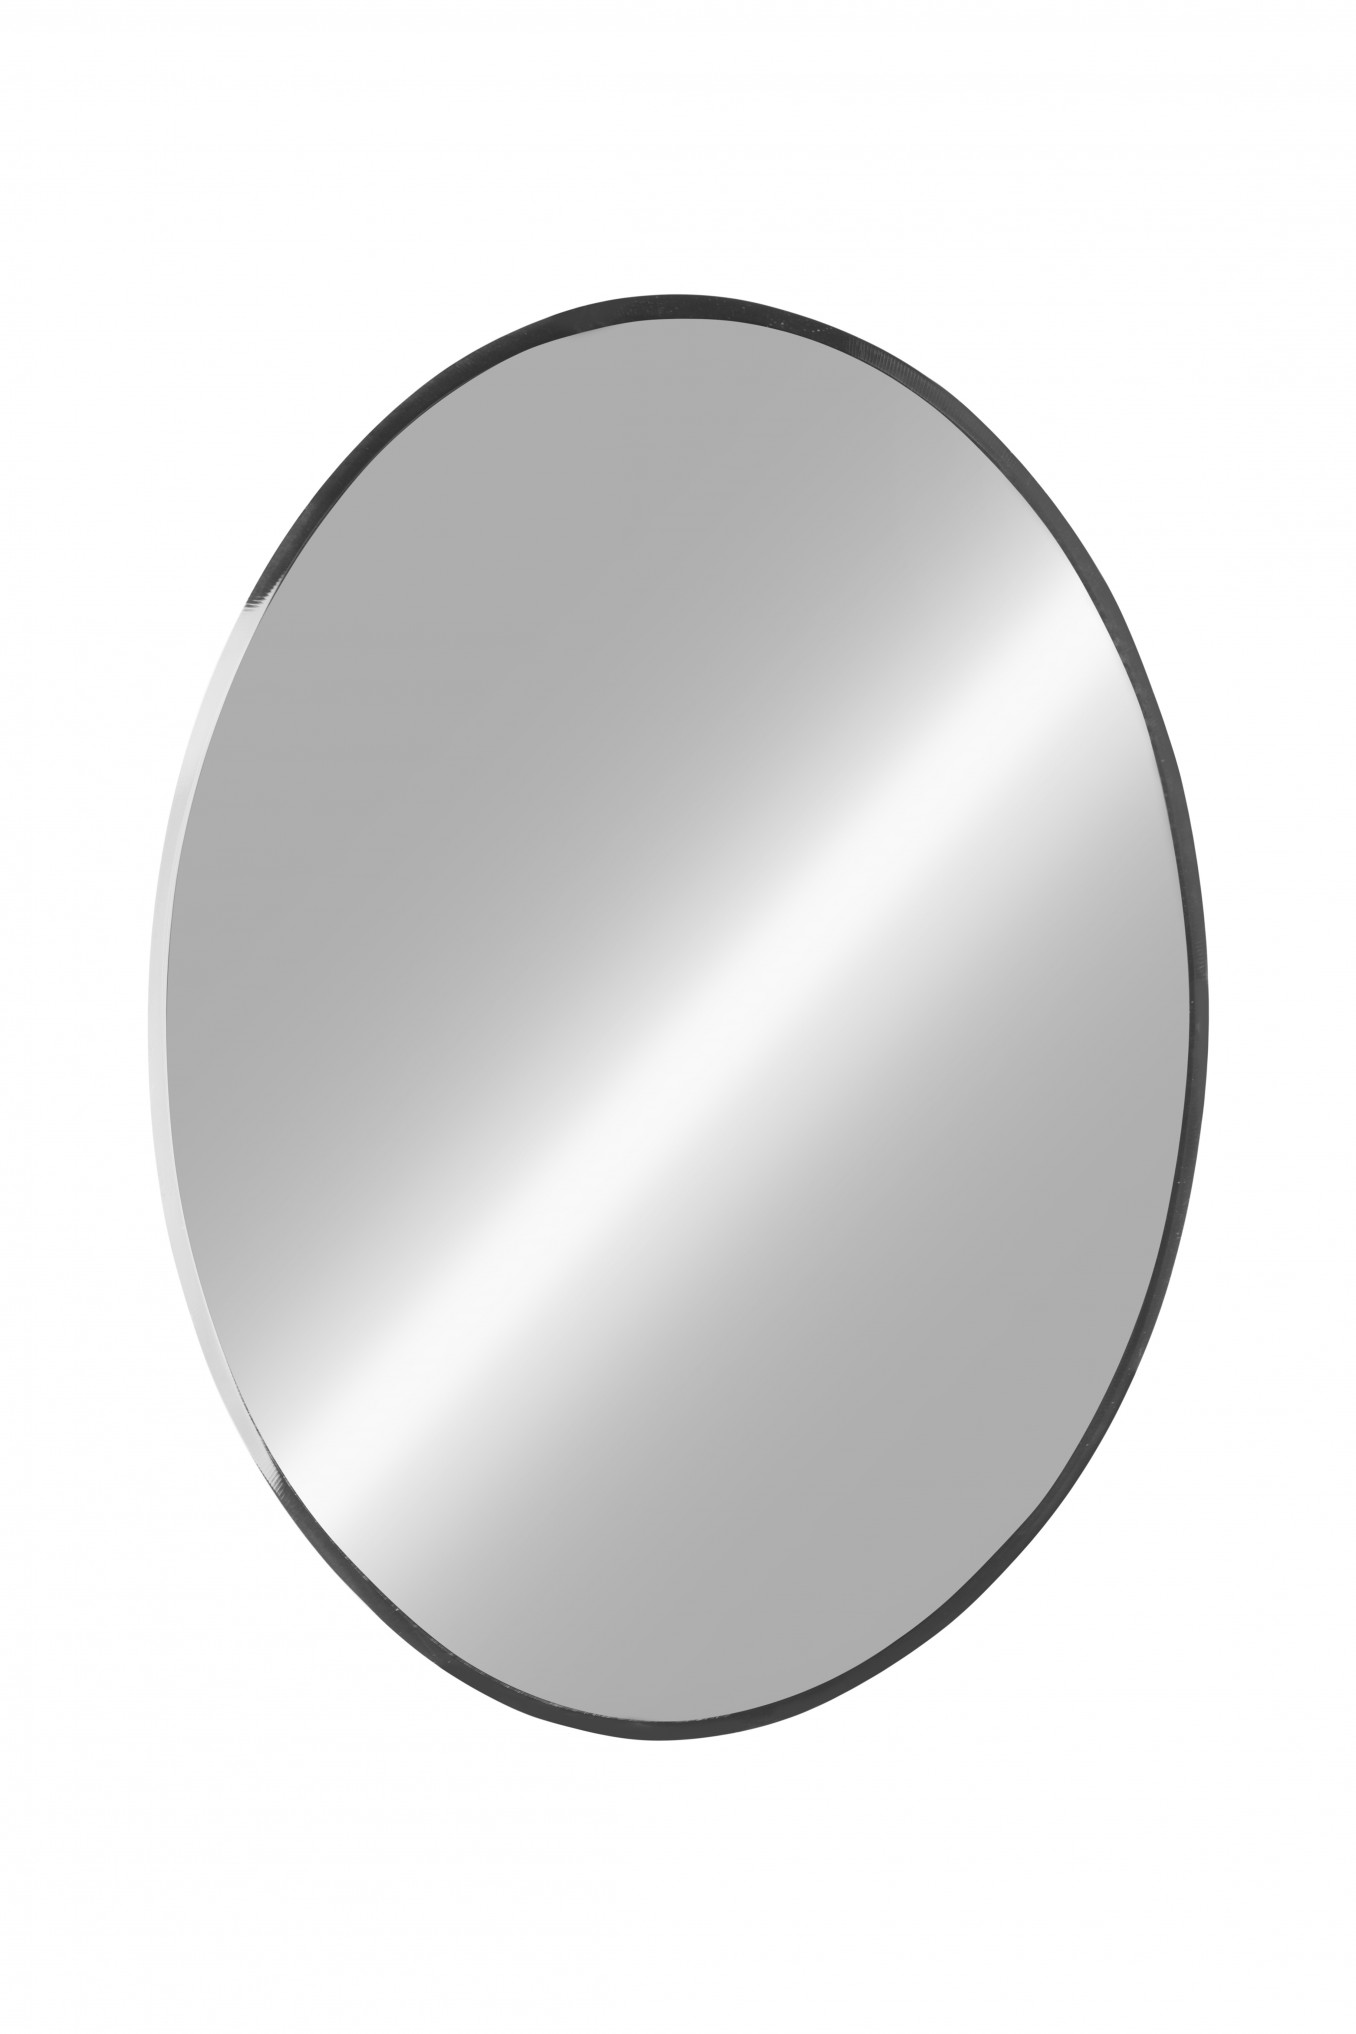 Ogledalo 1005 (60x45)